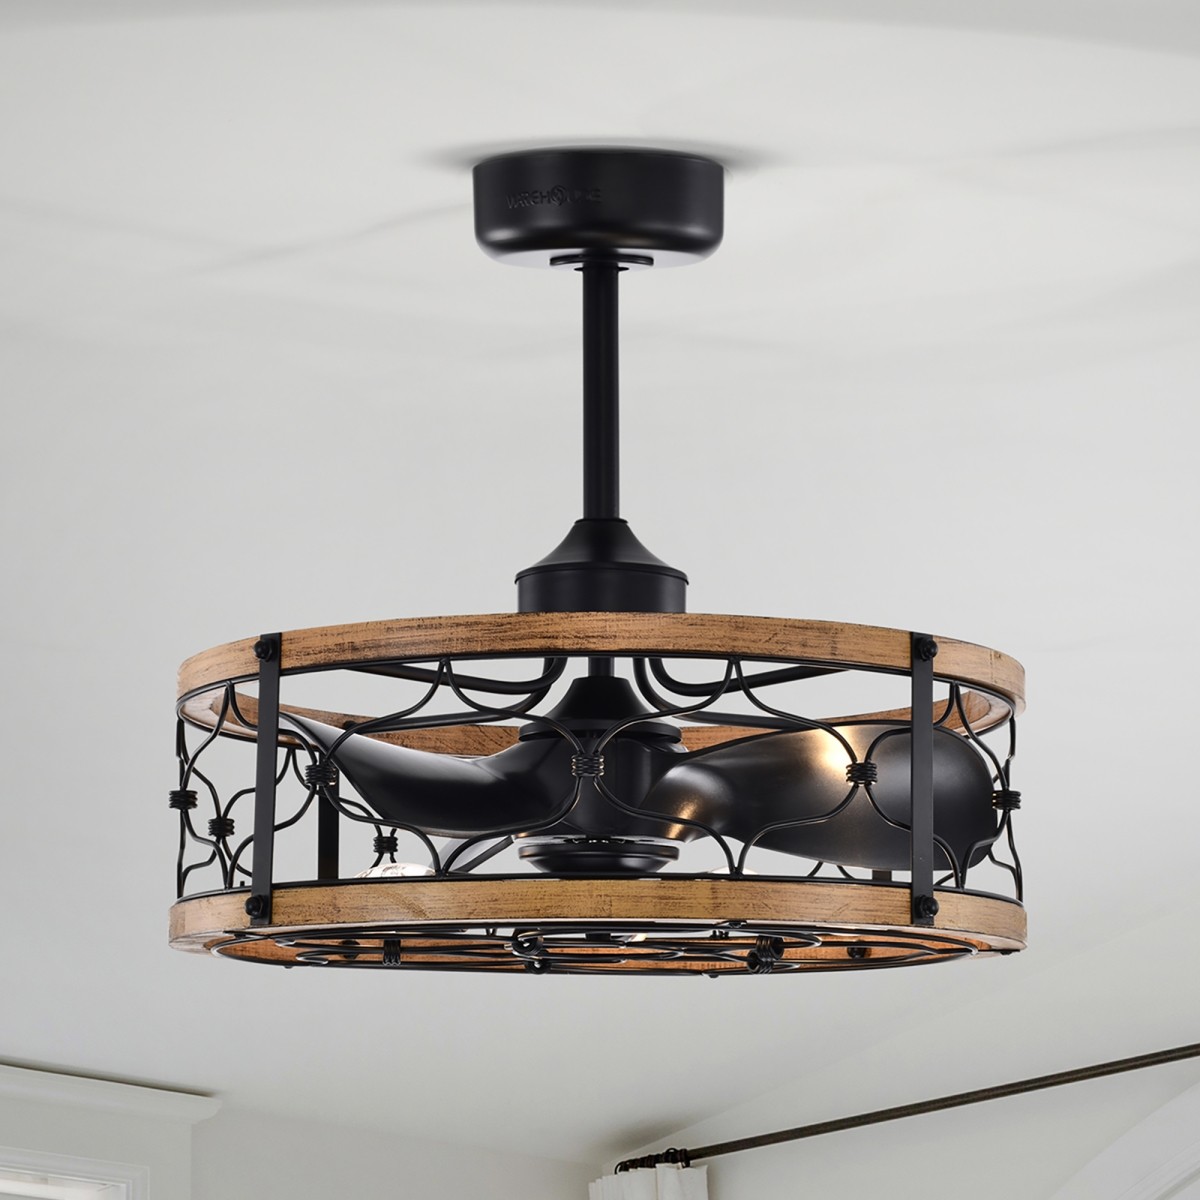 Cornelia 24 in. 5-Light Indoor Matte Black Finish Ceiling Fan with Light Kit